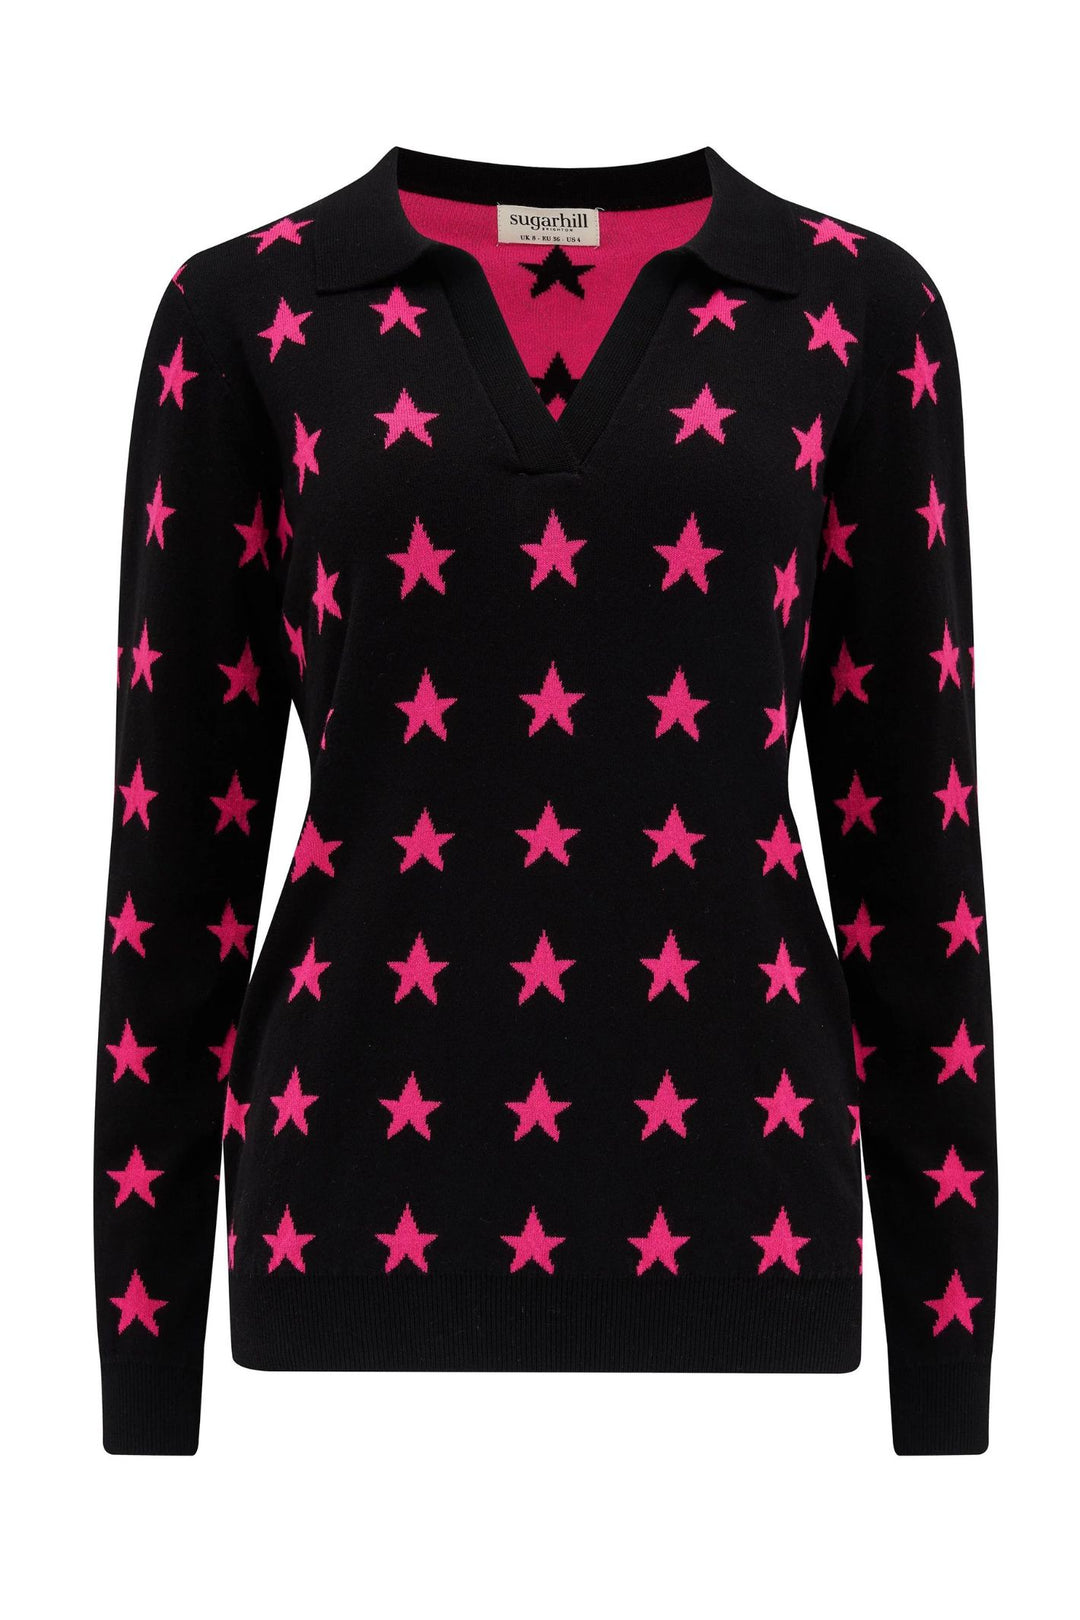 Sugarhill Brighton Valentina Pink Star Repeat Jumper